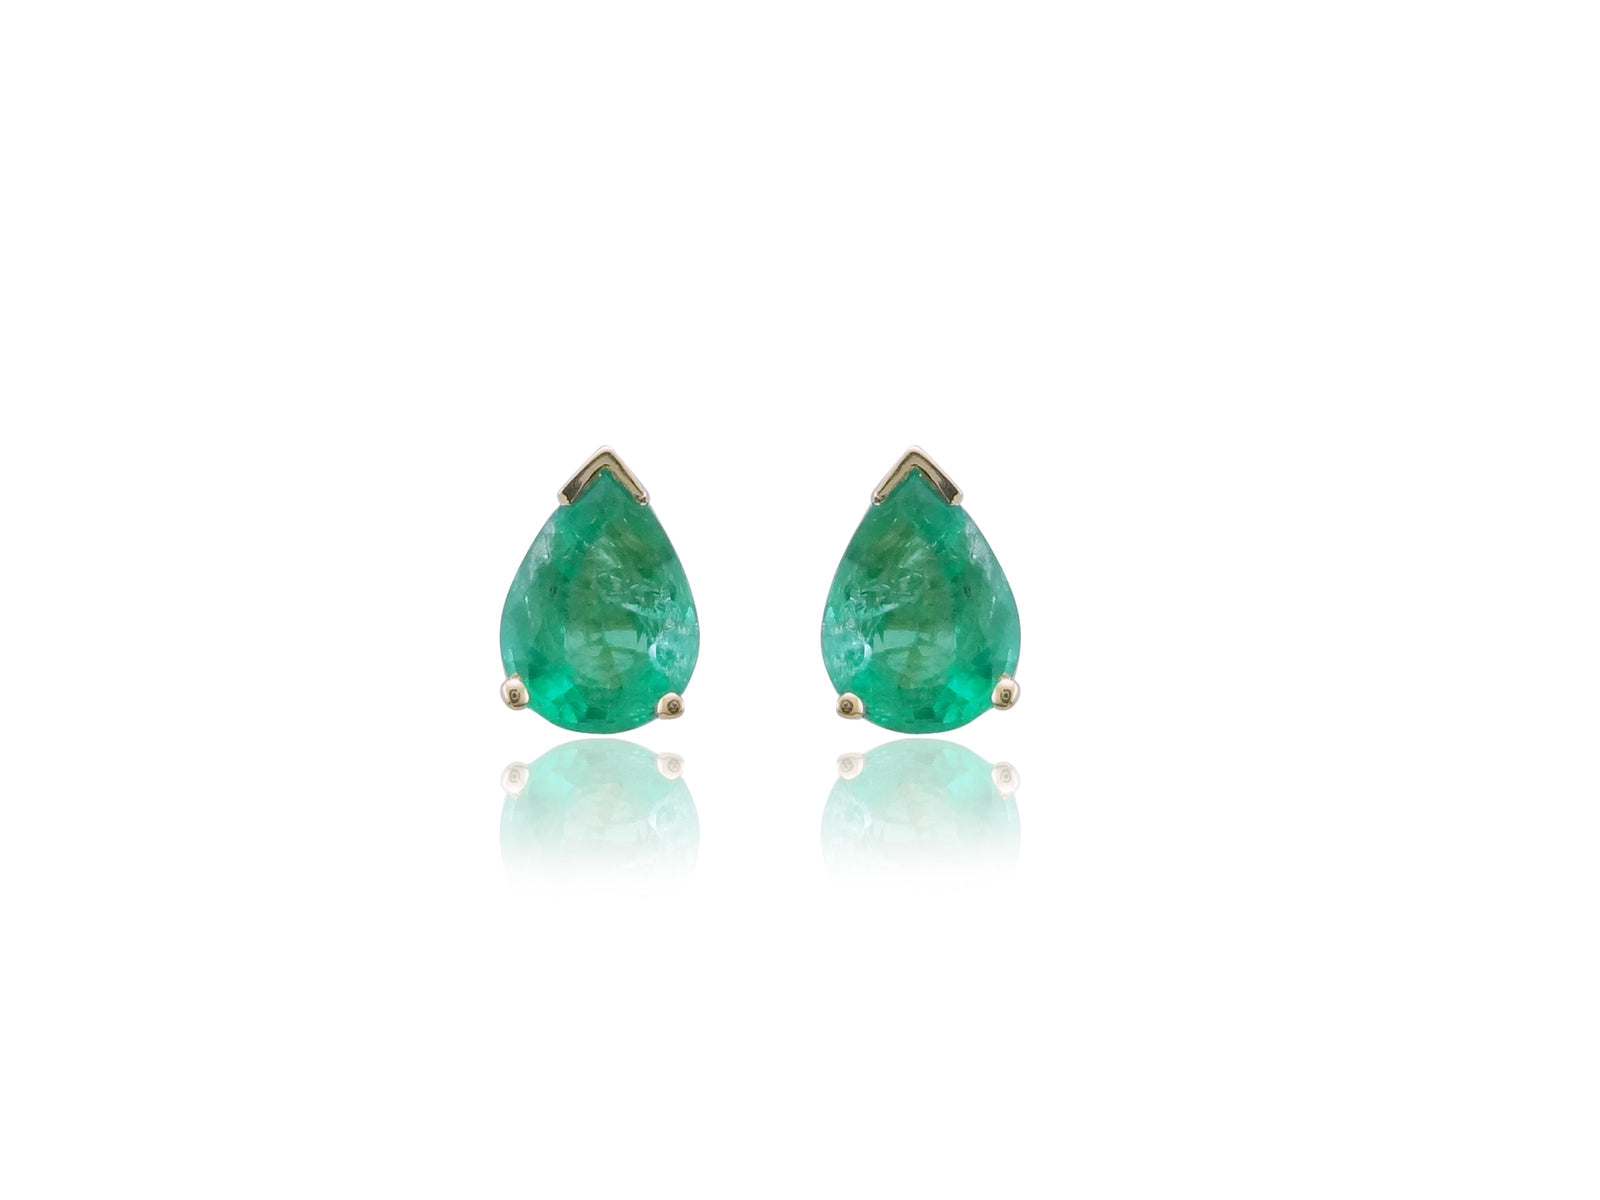 9ct gold 7x5mm pear shape emerald stud earrings